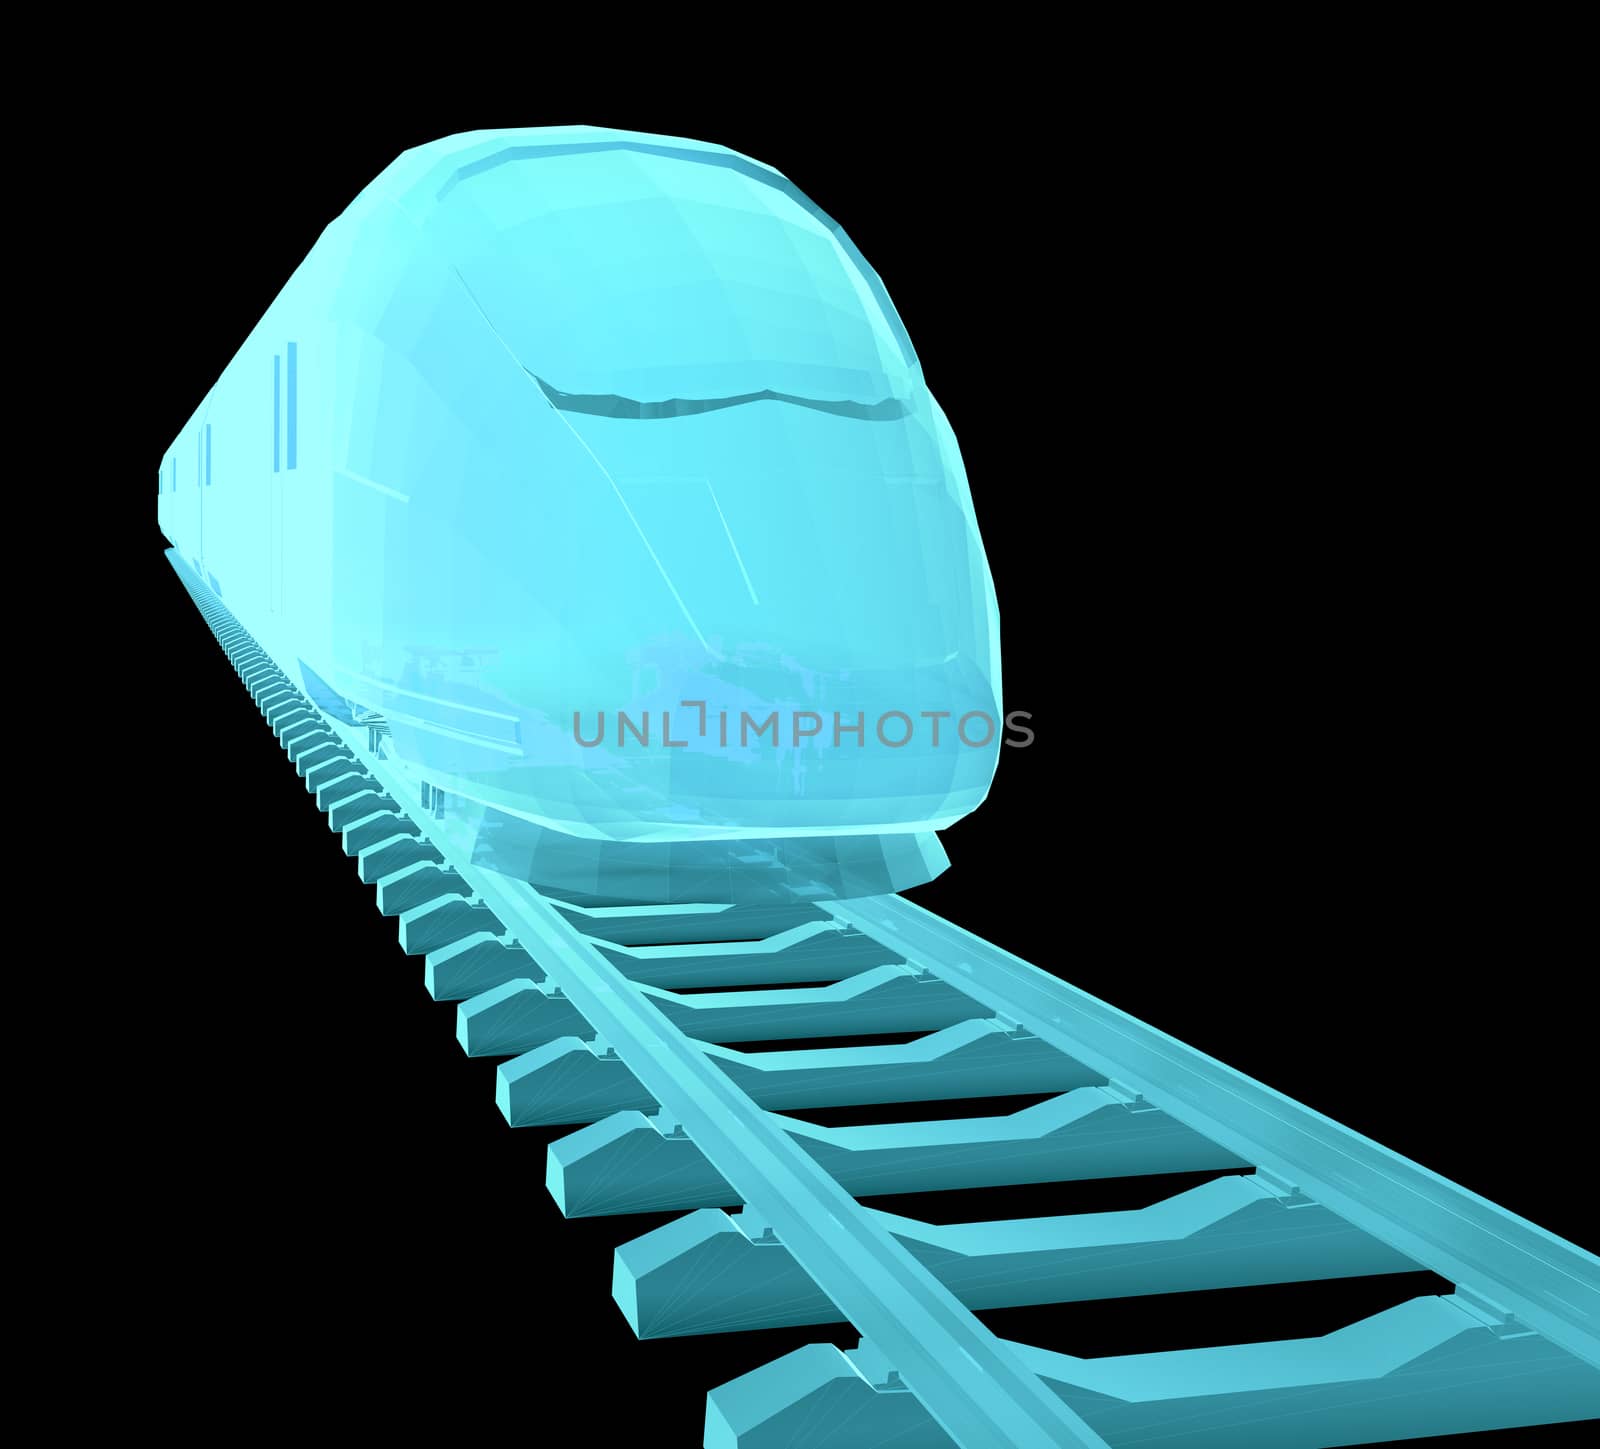 Glow blue high-speed train on black background. 3d illustration